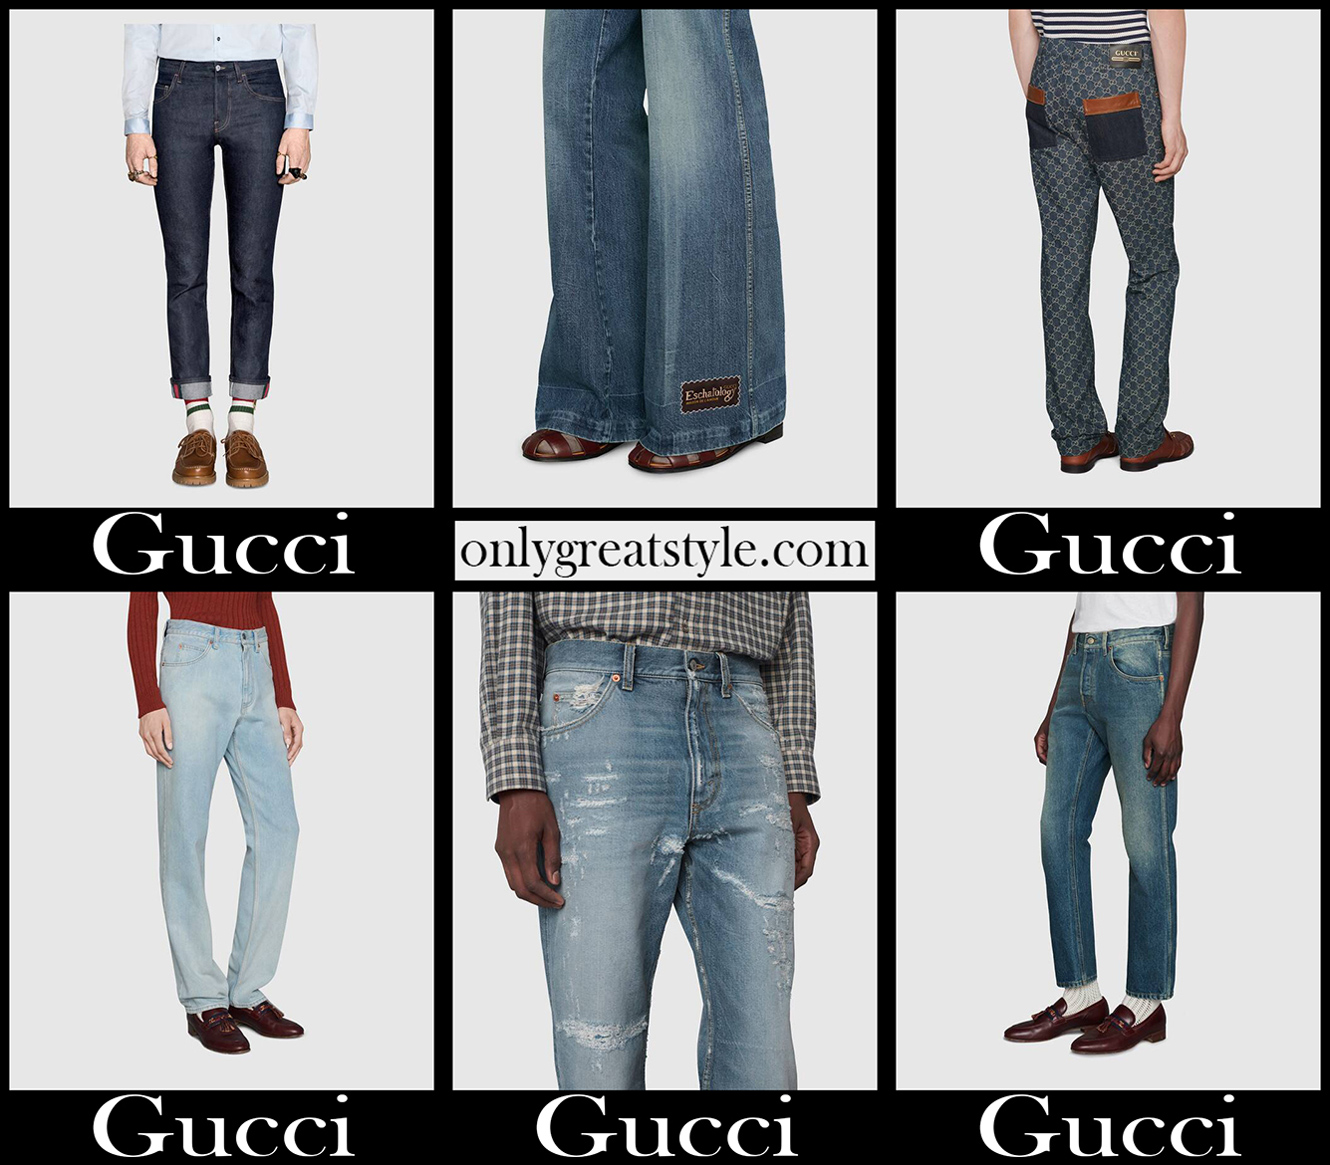 Gucci jeans new arrivals mens clothing denim fashion